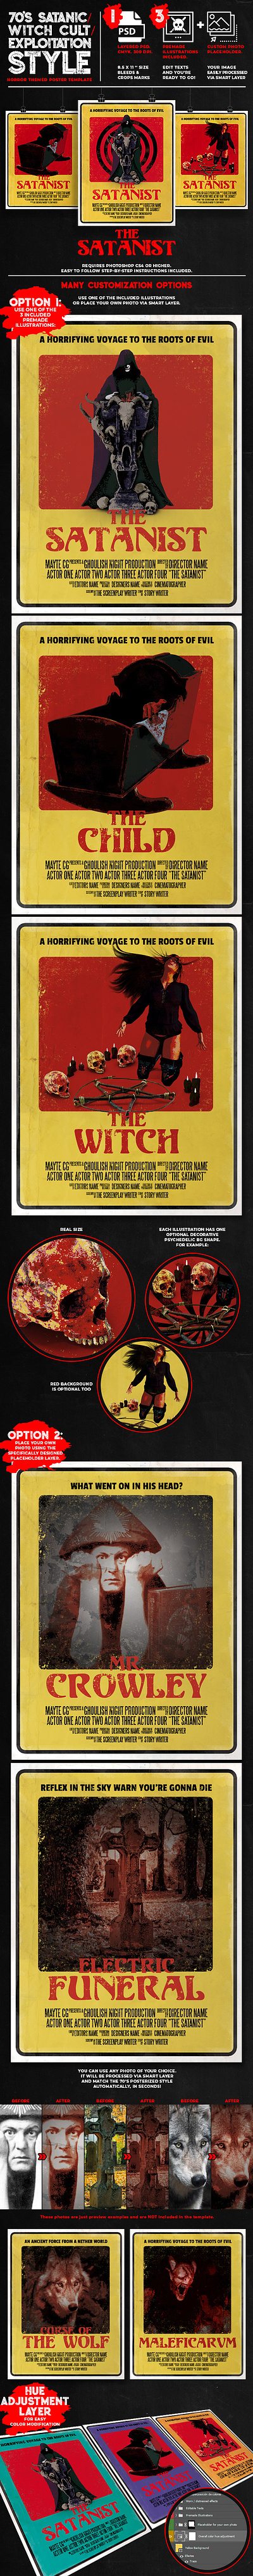 The Satanist 70's Exploitation Horror Poster Template 70s dark exploitation film grindhouse horror metal movie poster retro ritual satan satanist